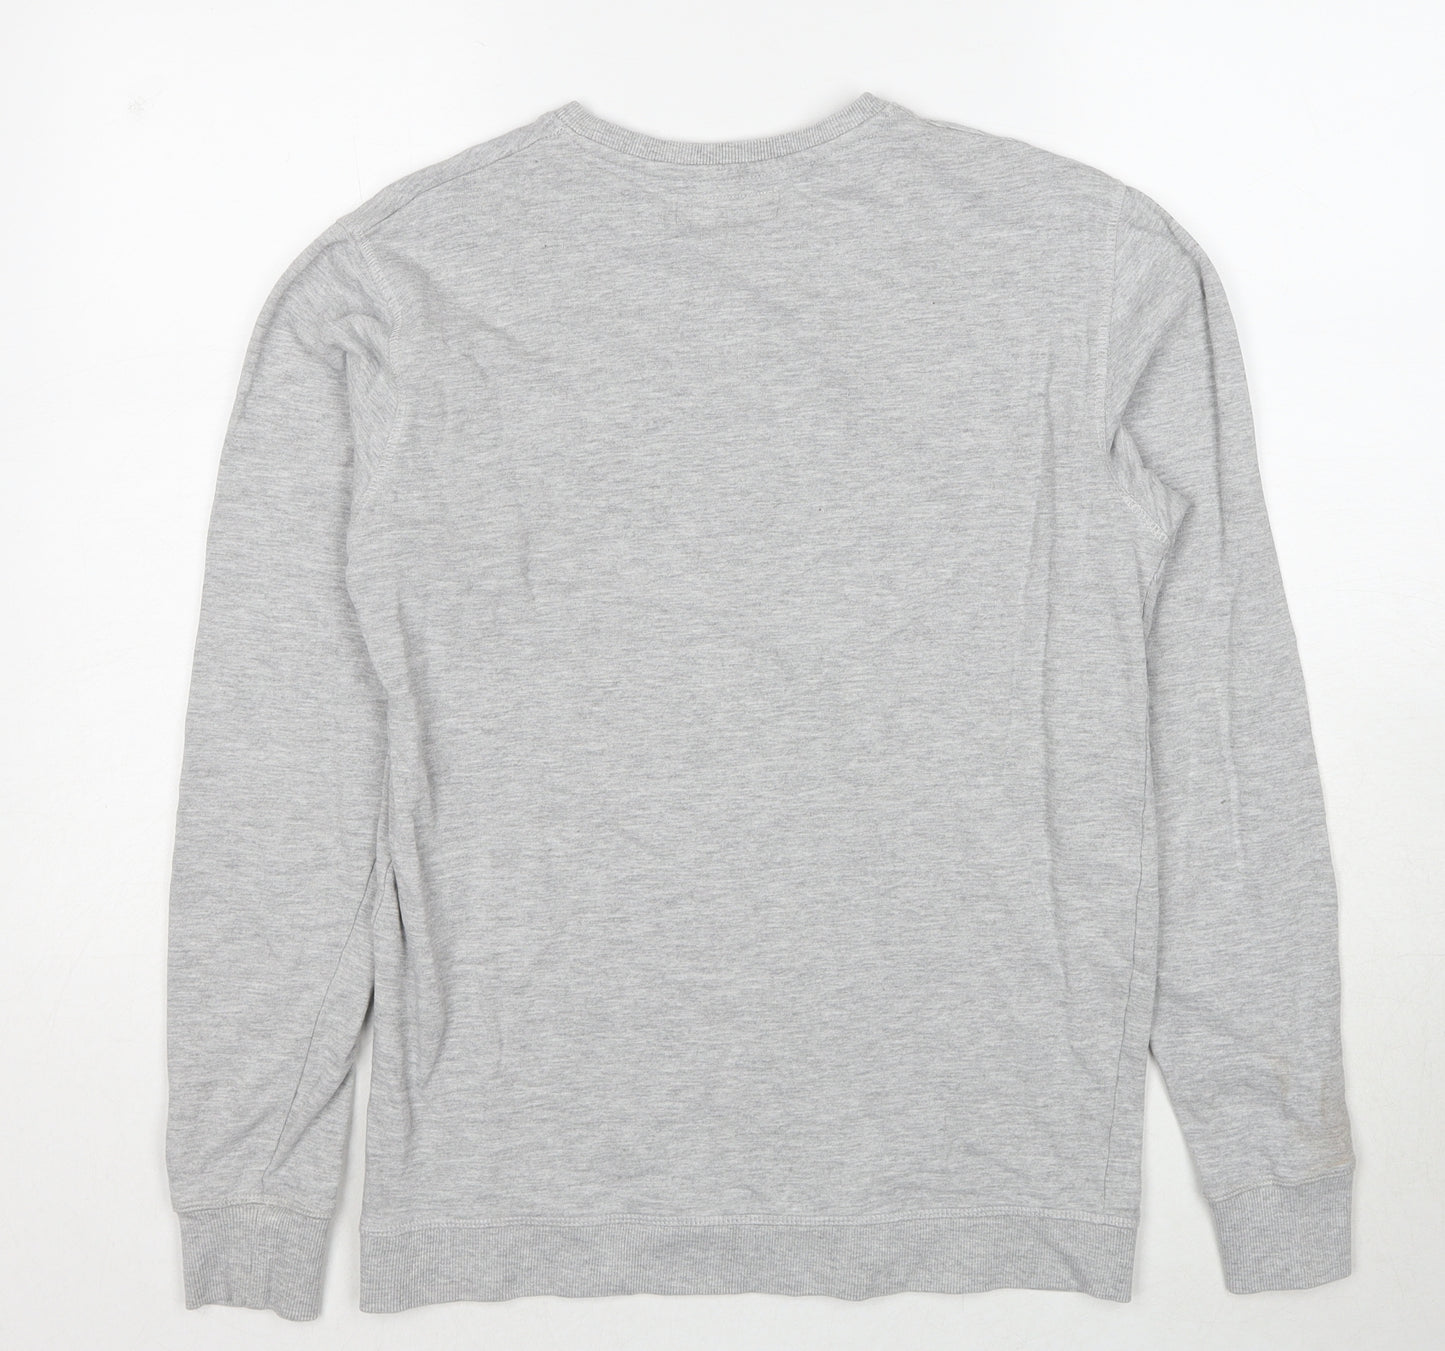 !Solid Mens Grey Cotton Pullover Sweatshirt Size M